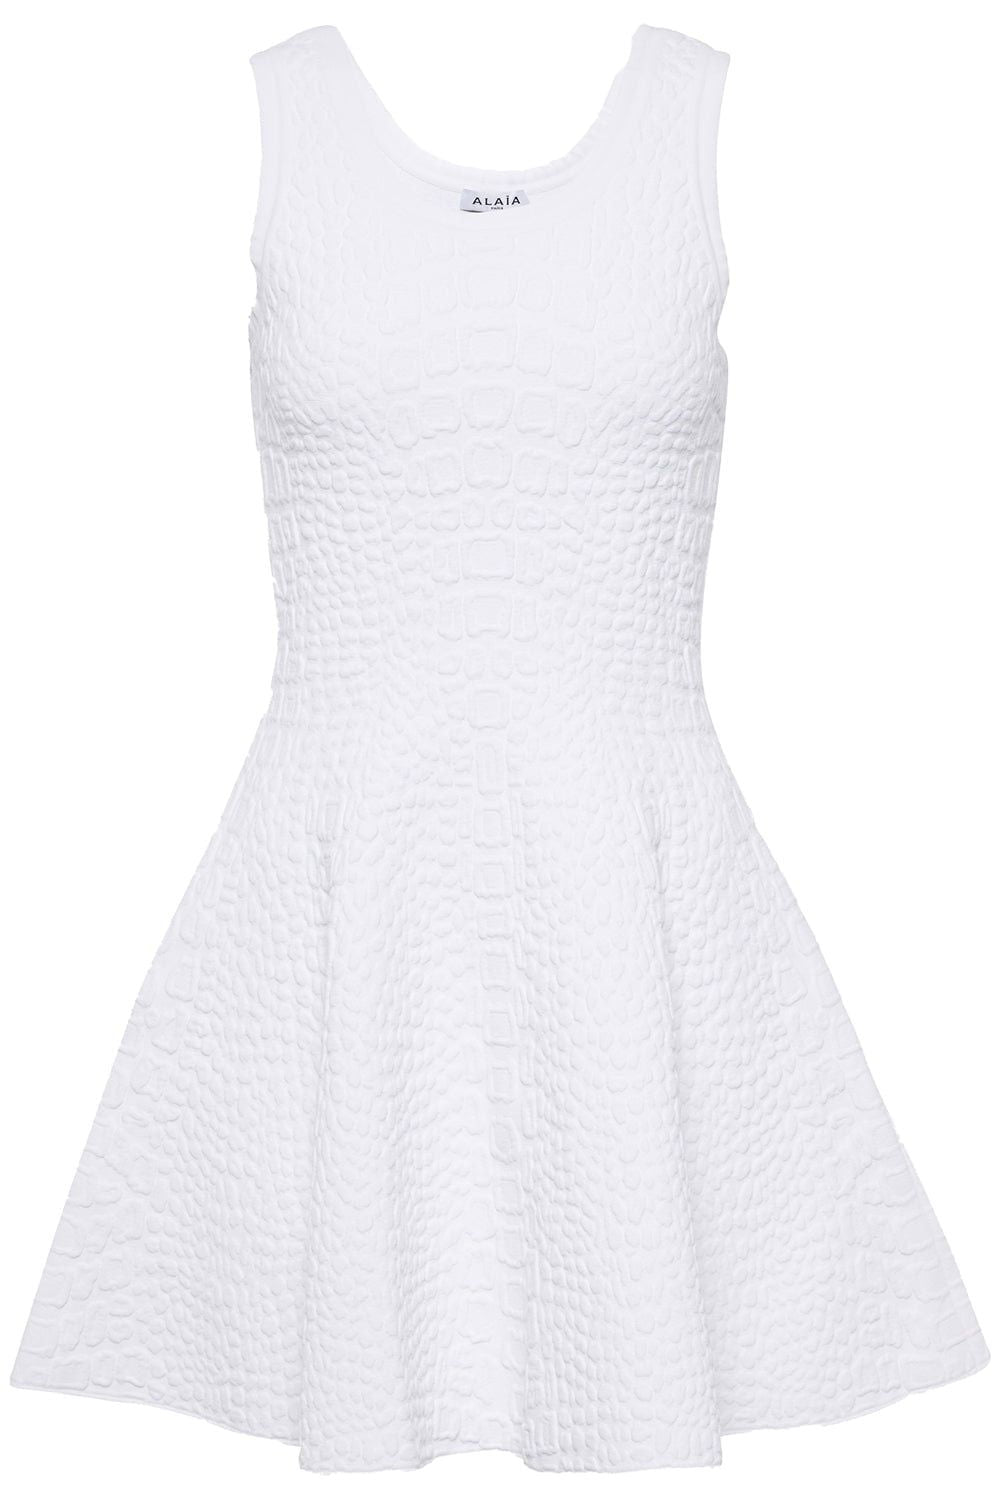 Alaïa Effortlessly Chic White Crocodile Effect Vest For Women